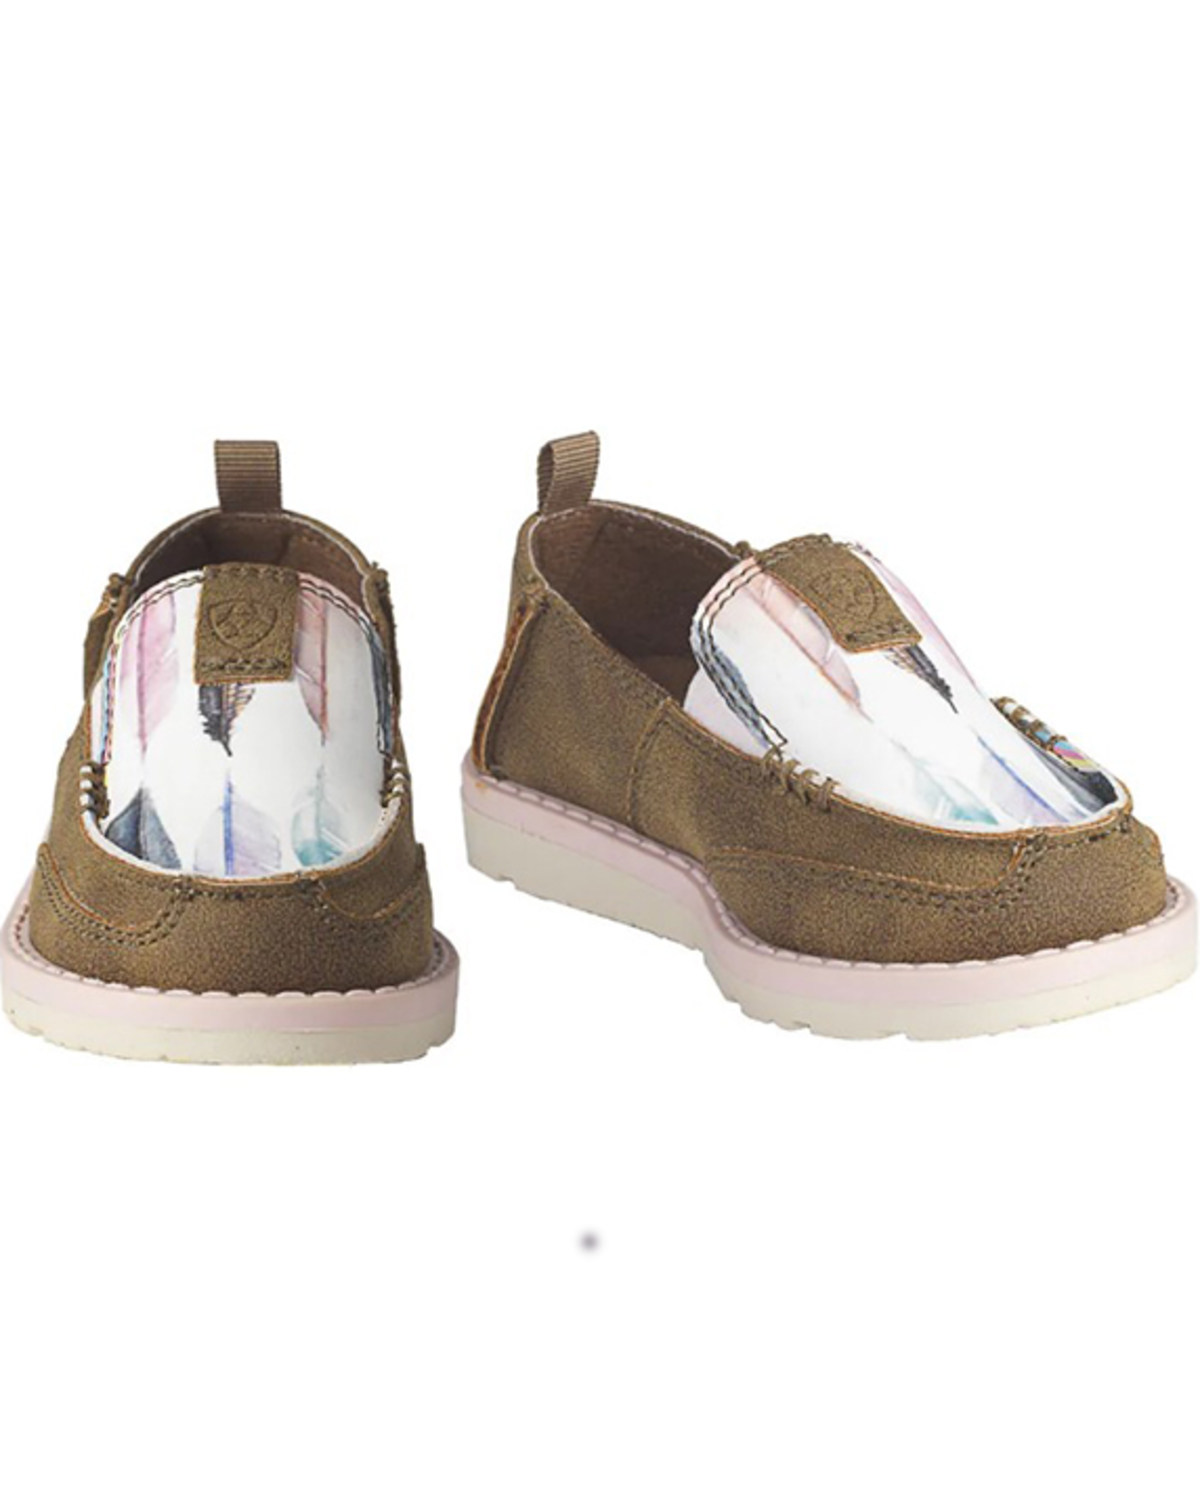 Ariat Toddler-Girls' Anna Southwestern Slip-On Casual Shoe - Moc Toe